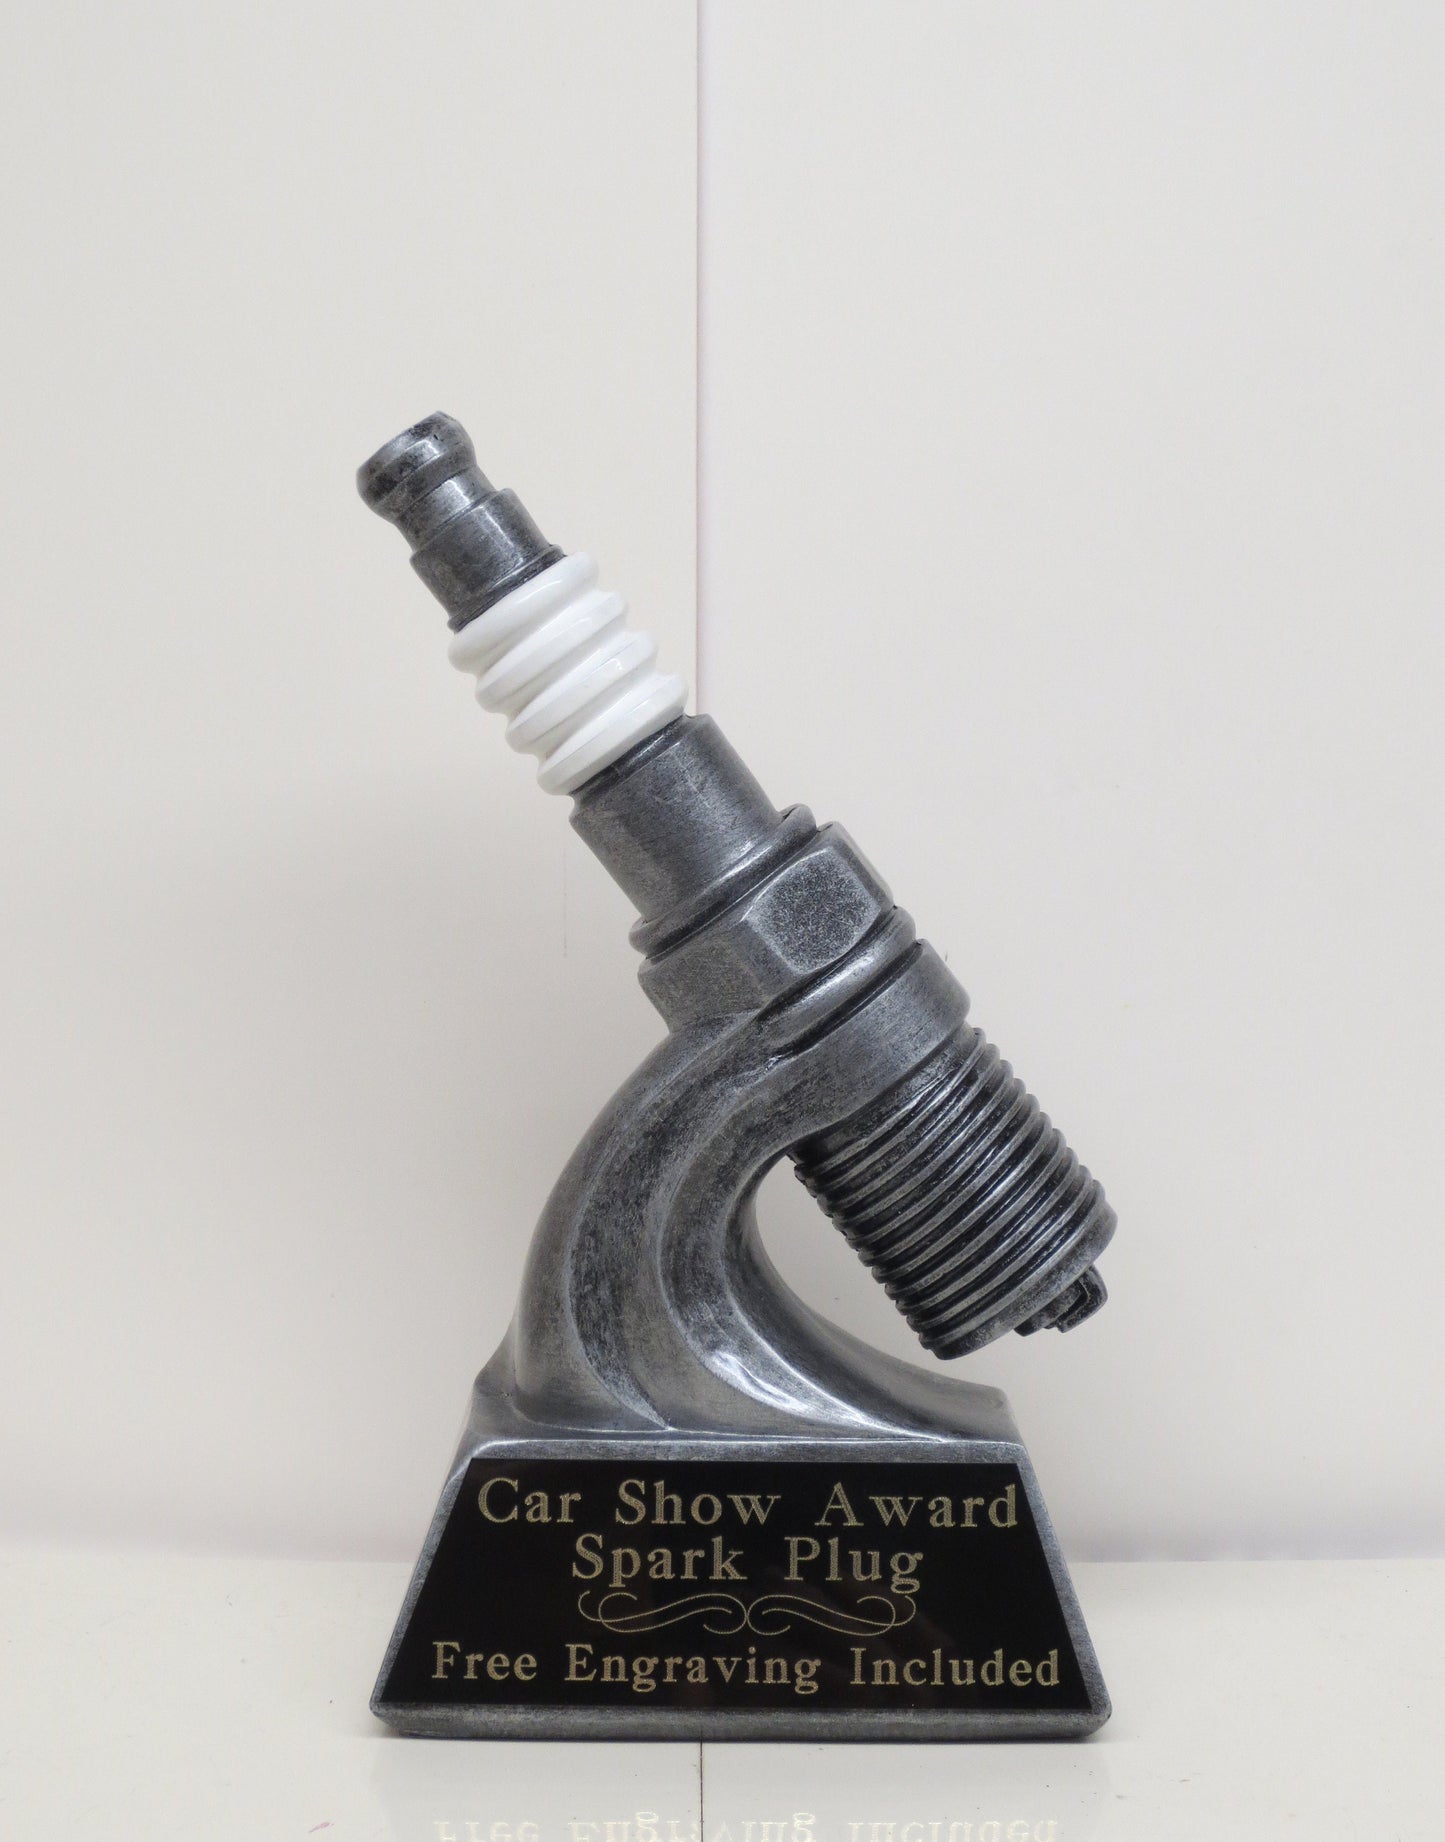 Car Show Trophy Racing Trophy 6" Spark Plug Hot Rod Trophy Silver Spark Plug Award Winner Best In Show Antique Car Show Participant Trophy